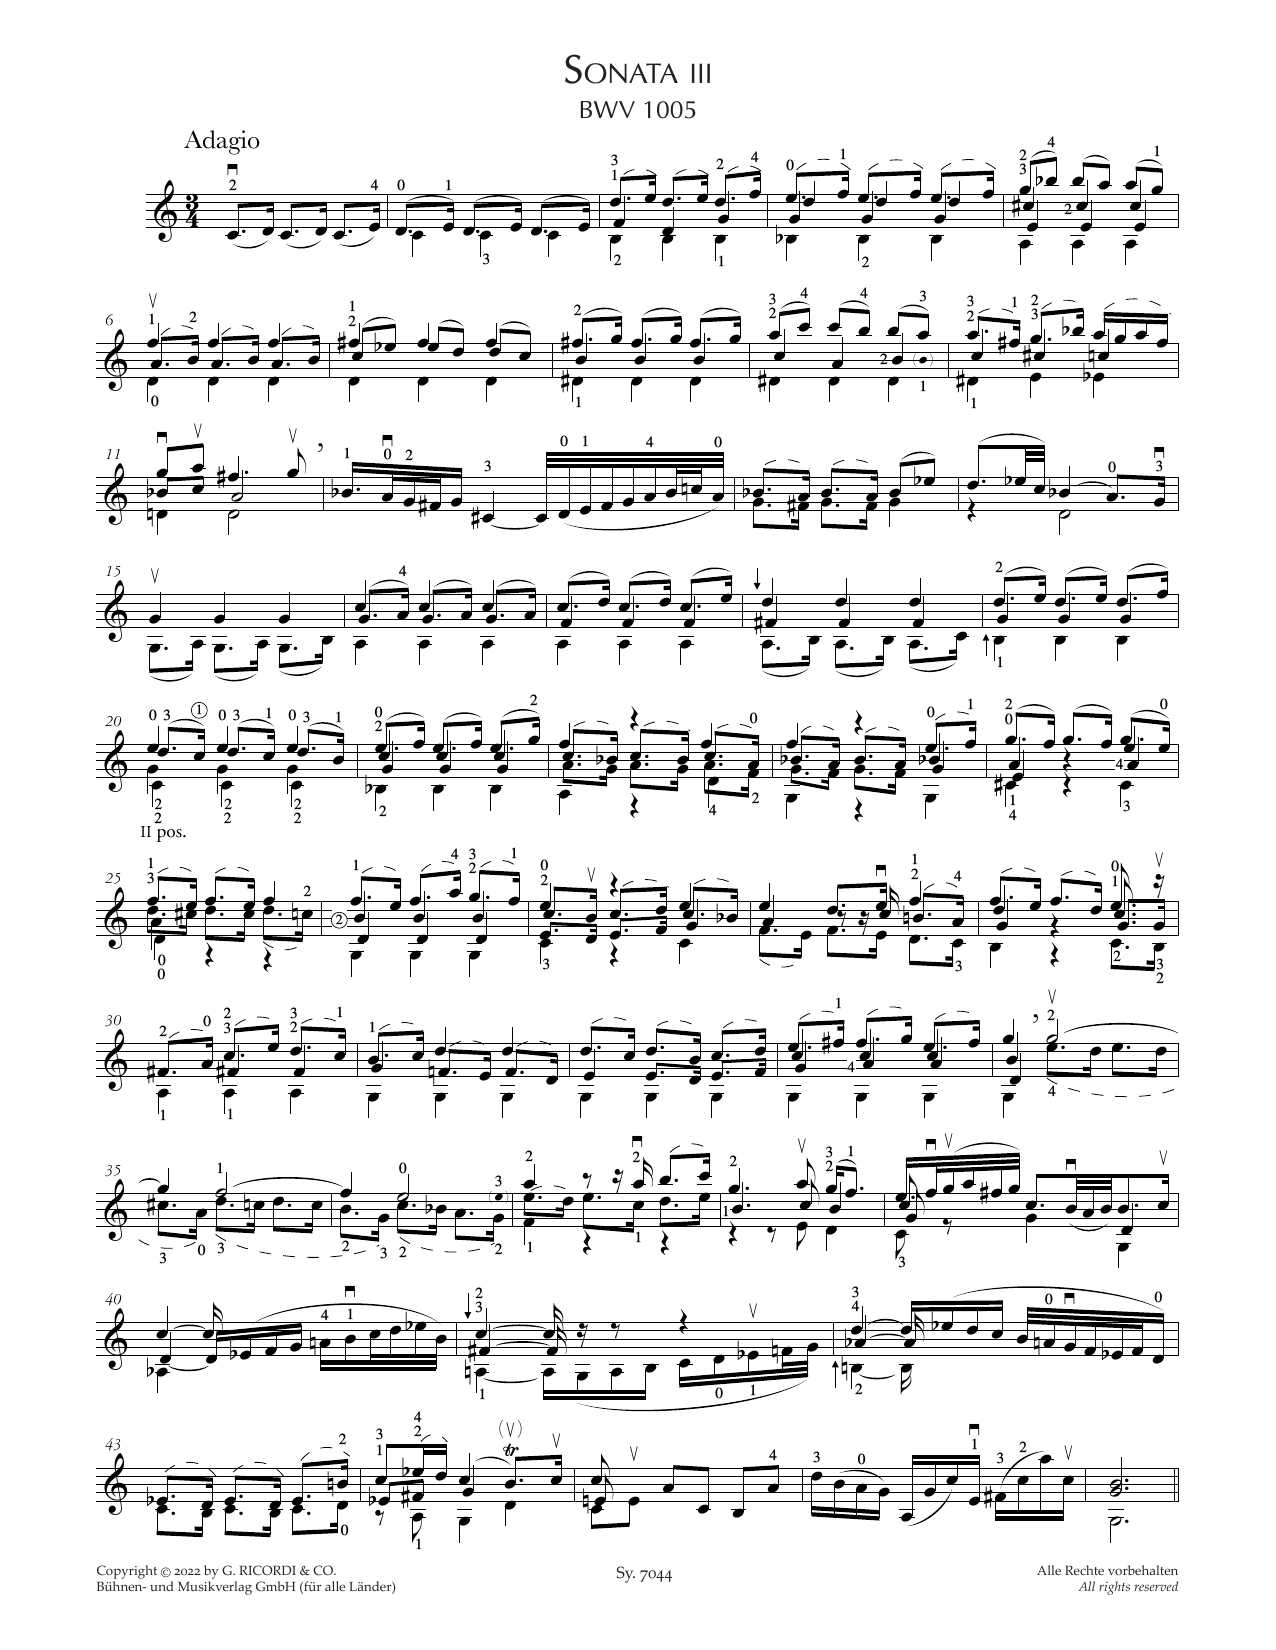 Johann Sebastian Bach Sonata III, BWV 1005 Sheet Music Notes & Chords for Violin Solo - Download or Print PDF